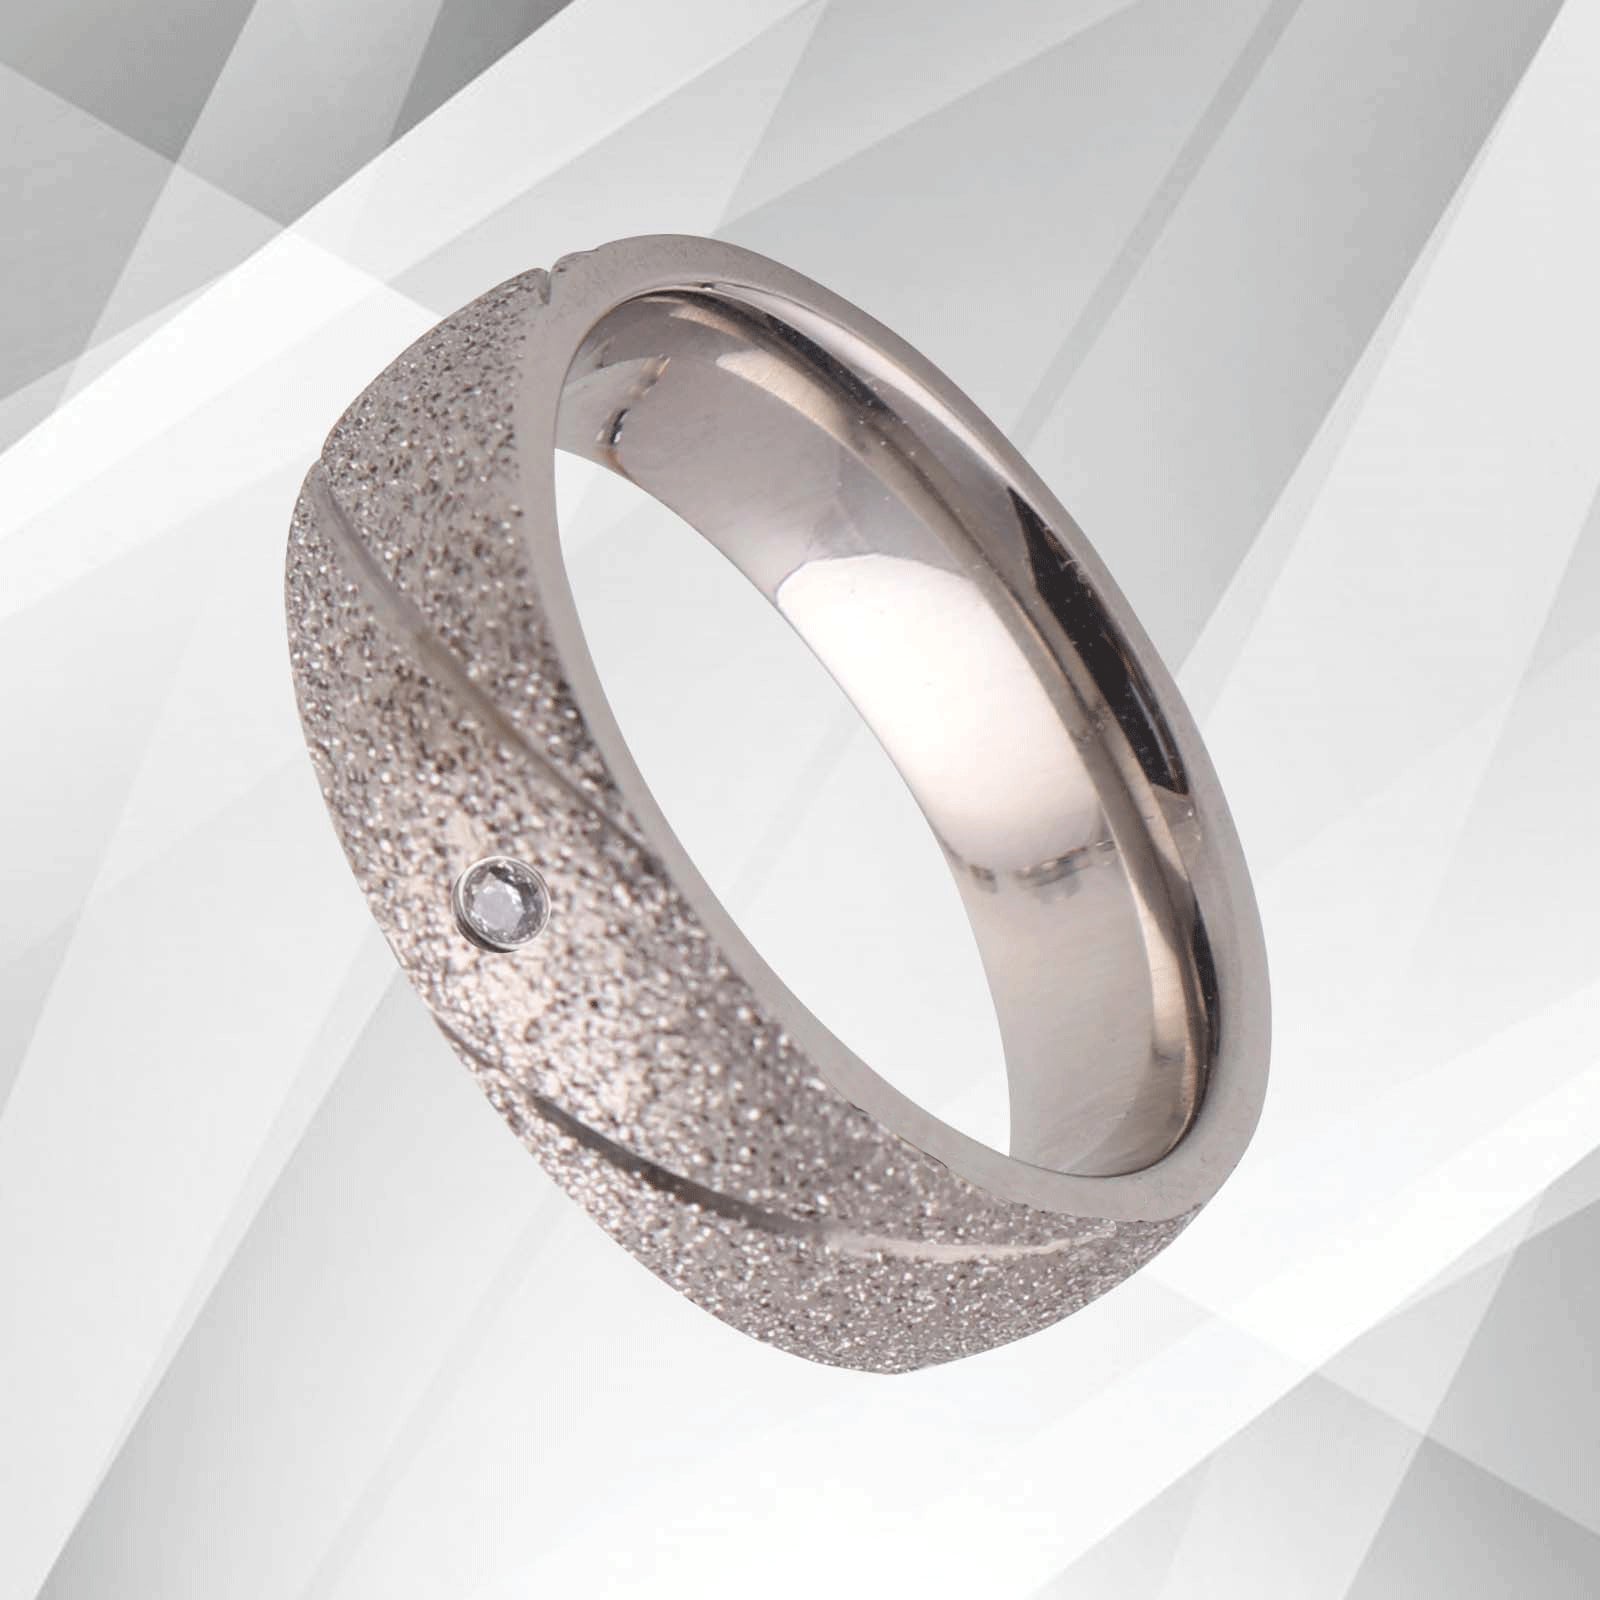 Glowing Designer Titanium CZ Diamond Ring - 6mm Wide, 18Ct White Gold Finish, Comfort Fit - Engagement, Wedding, Anniversary Gift Band - Women's, Handmade, NDFJ15A Bijou Her